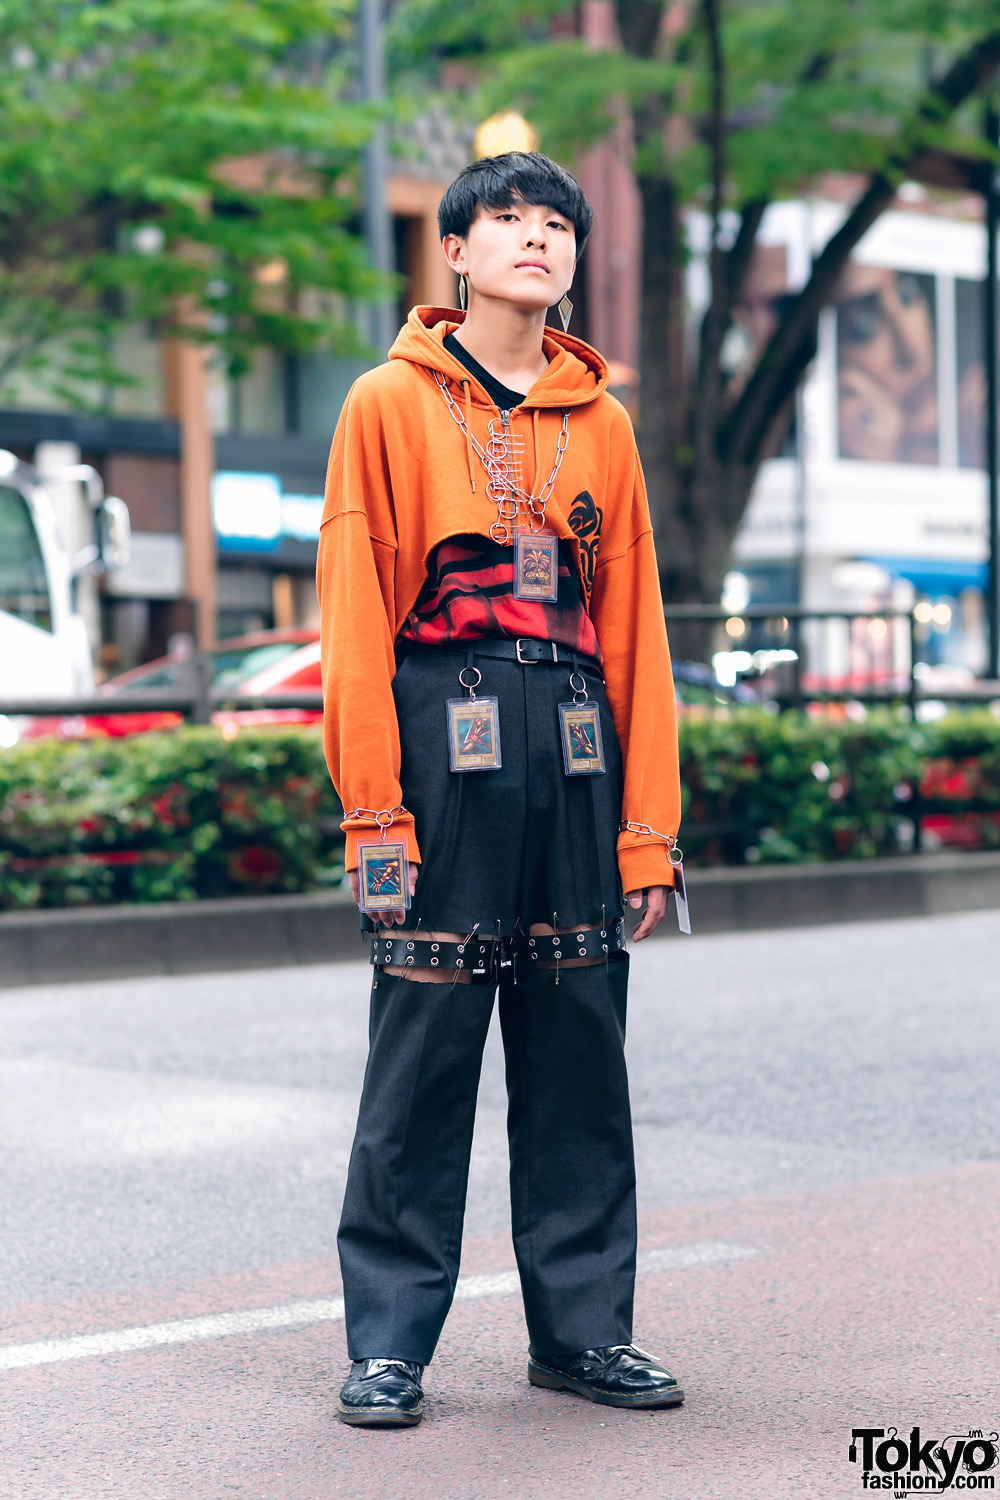 weeniebagel:  tokyo-fashion: Tokyo high school student Makoto on the street in Harajuku